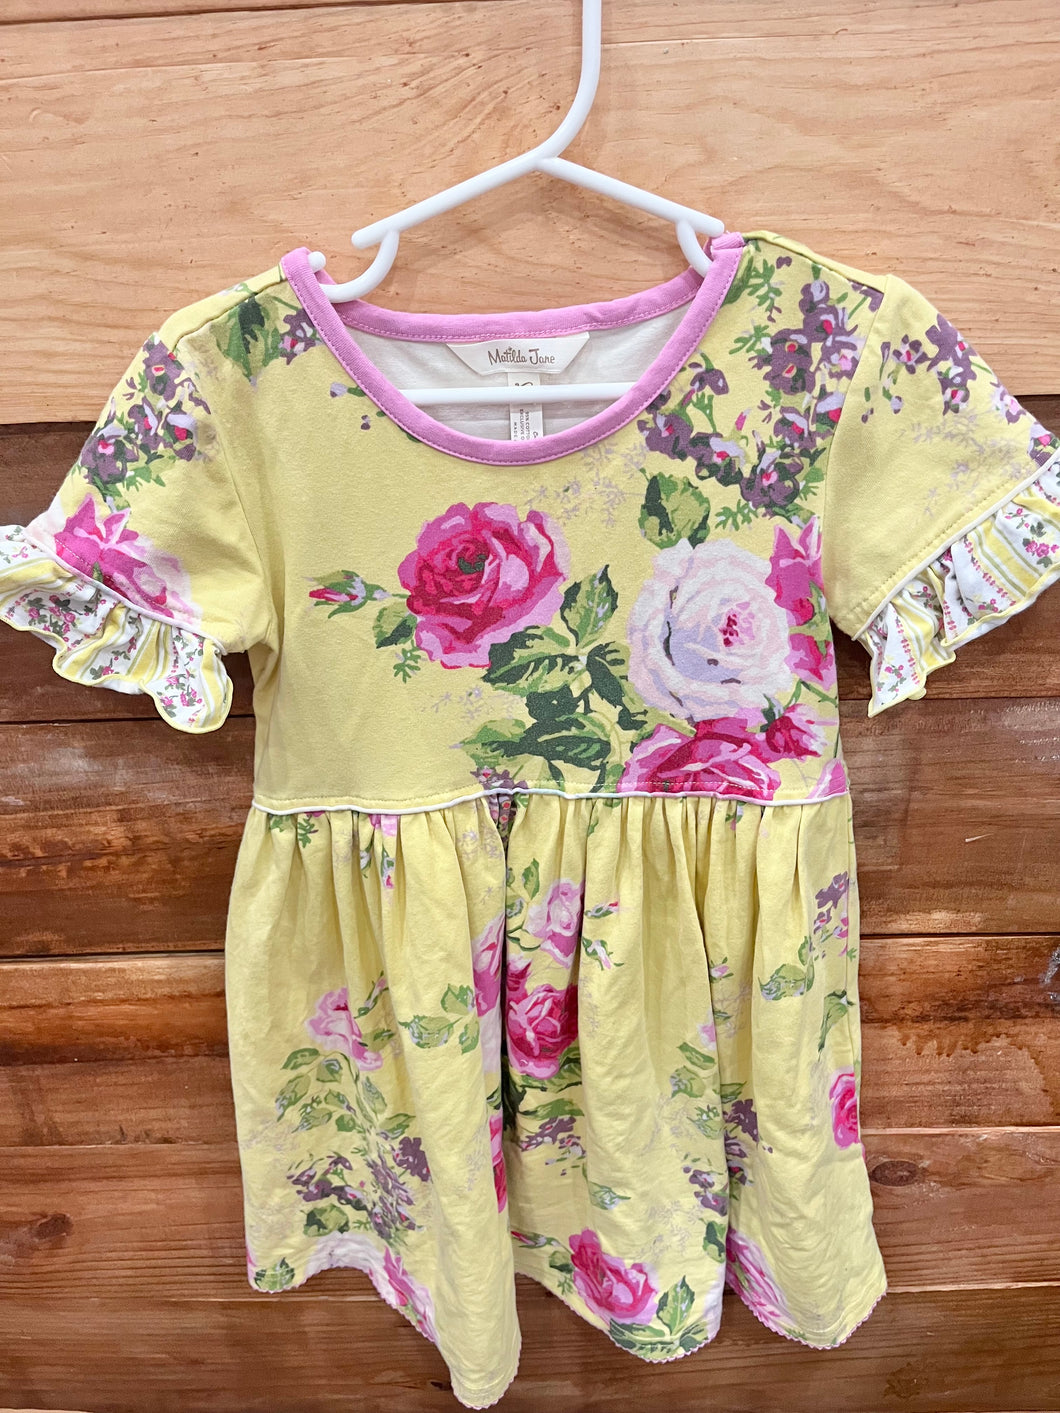 Matilda Jane Yellow Roses Dress Size 6